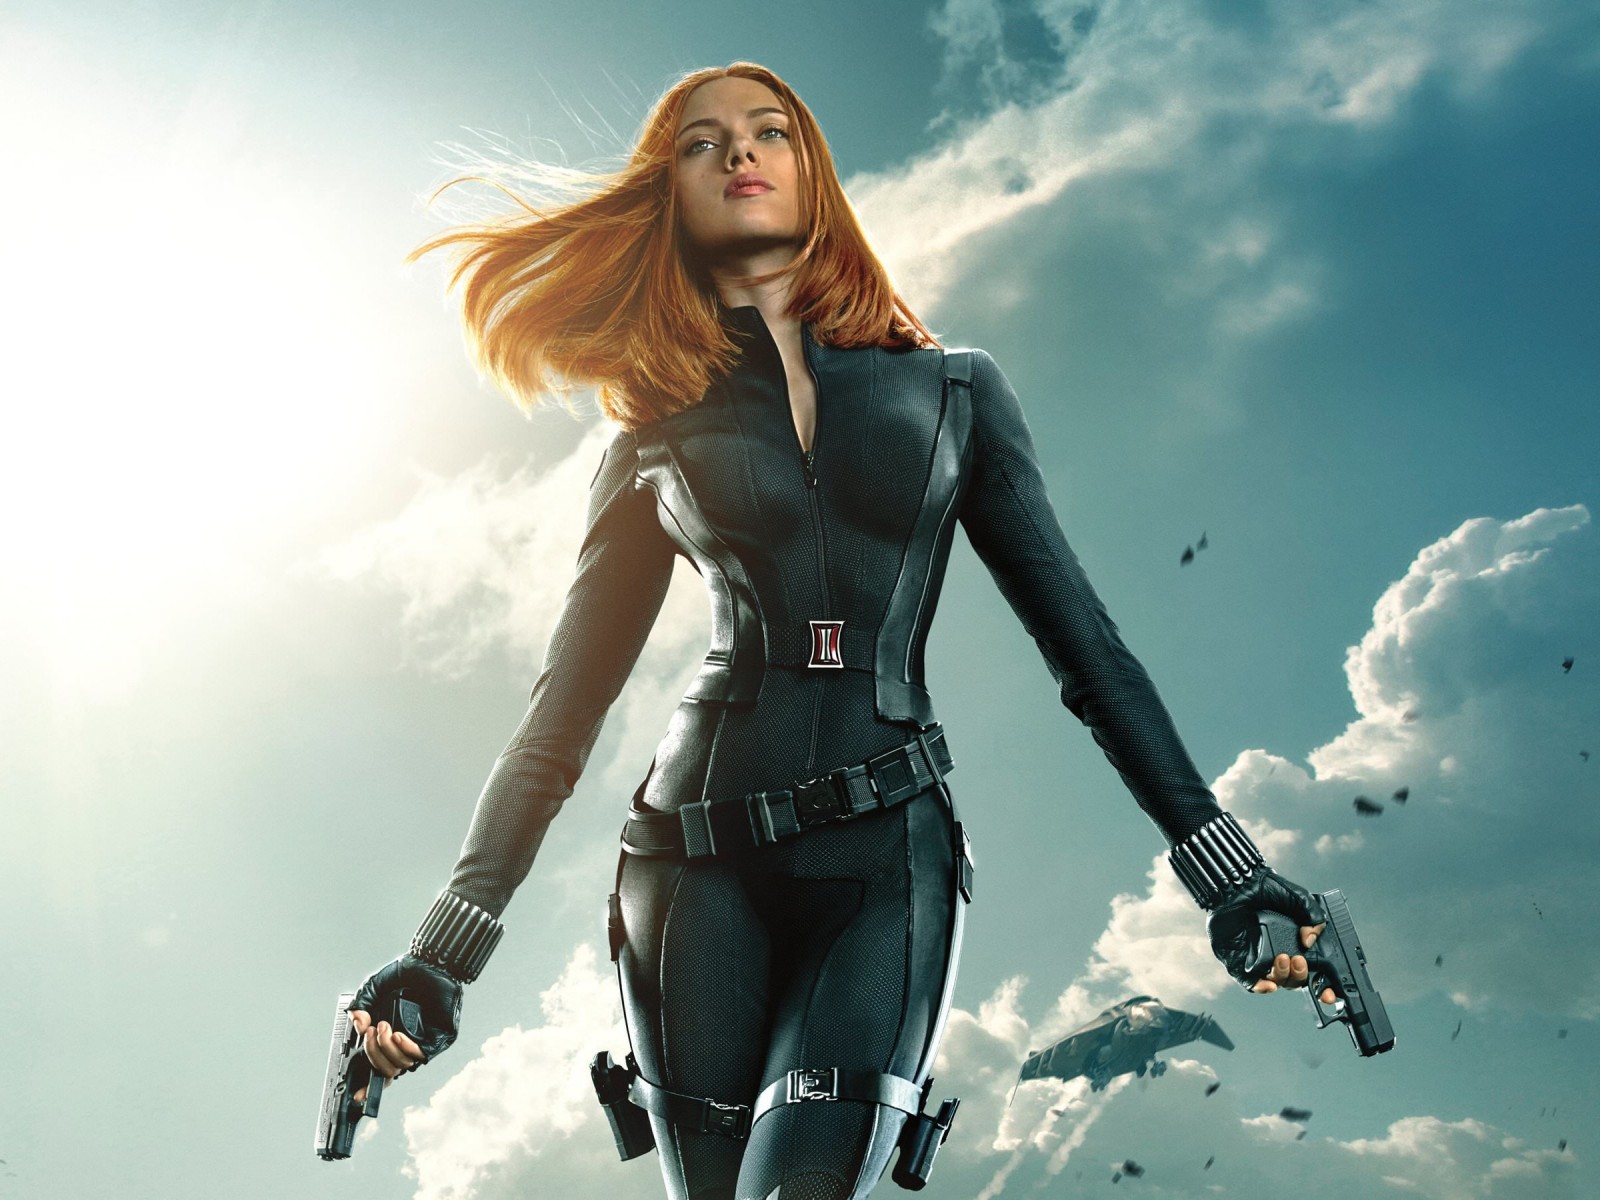 Scarlett Johansson in "Captain America: The Winter Soldier" Wallpaper for Desktop 1600x1200